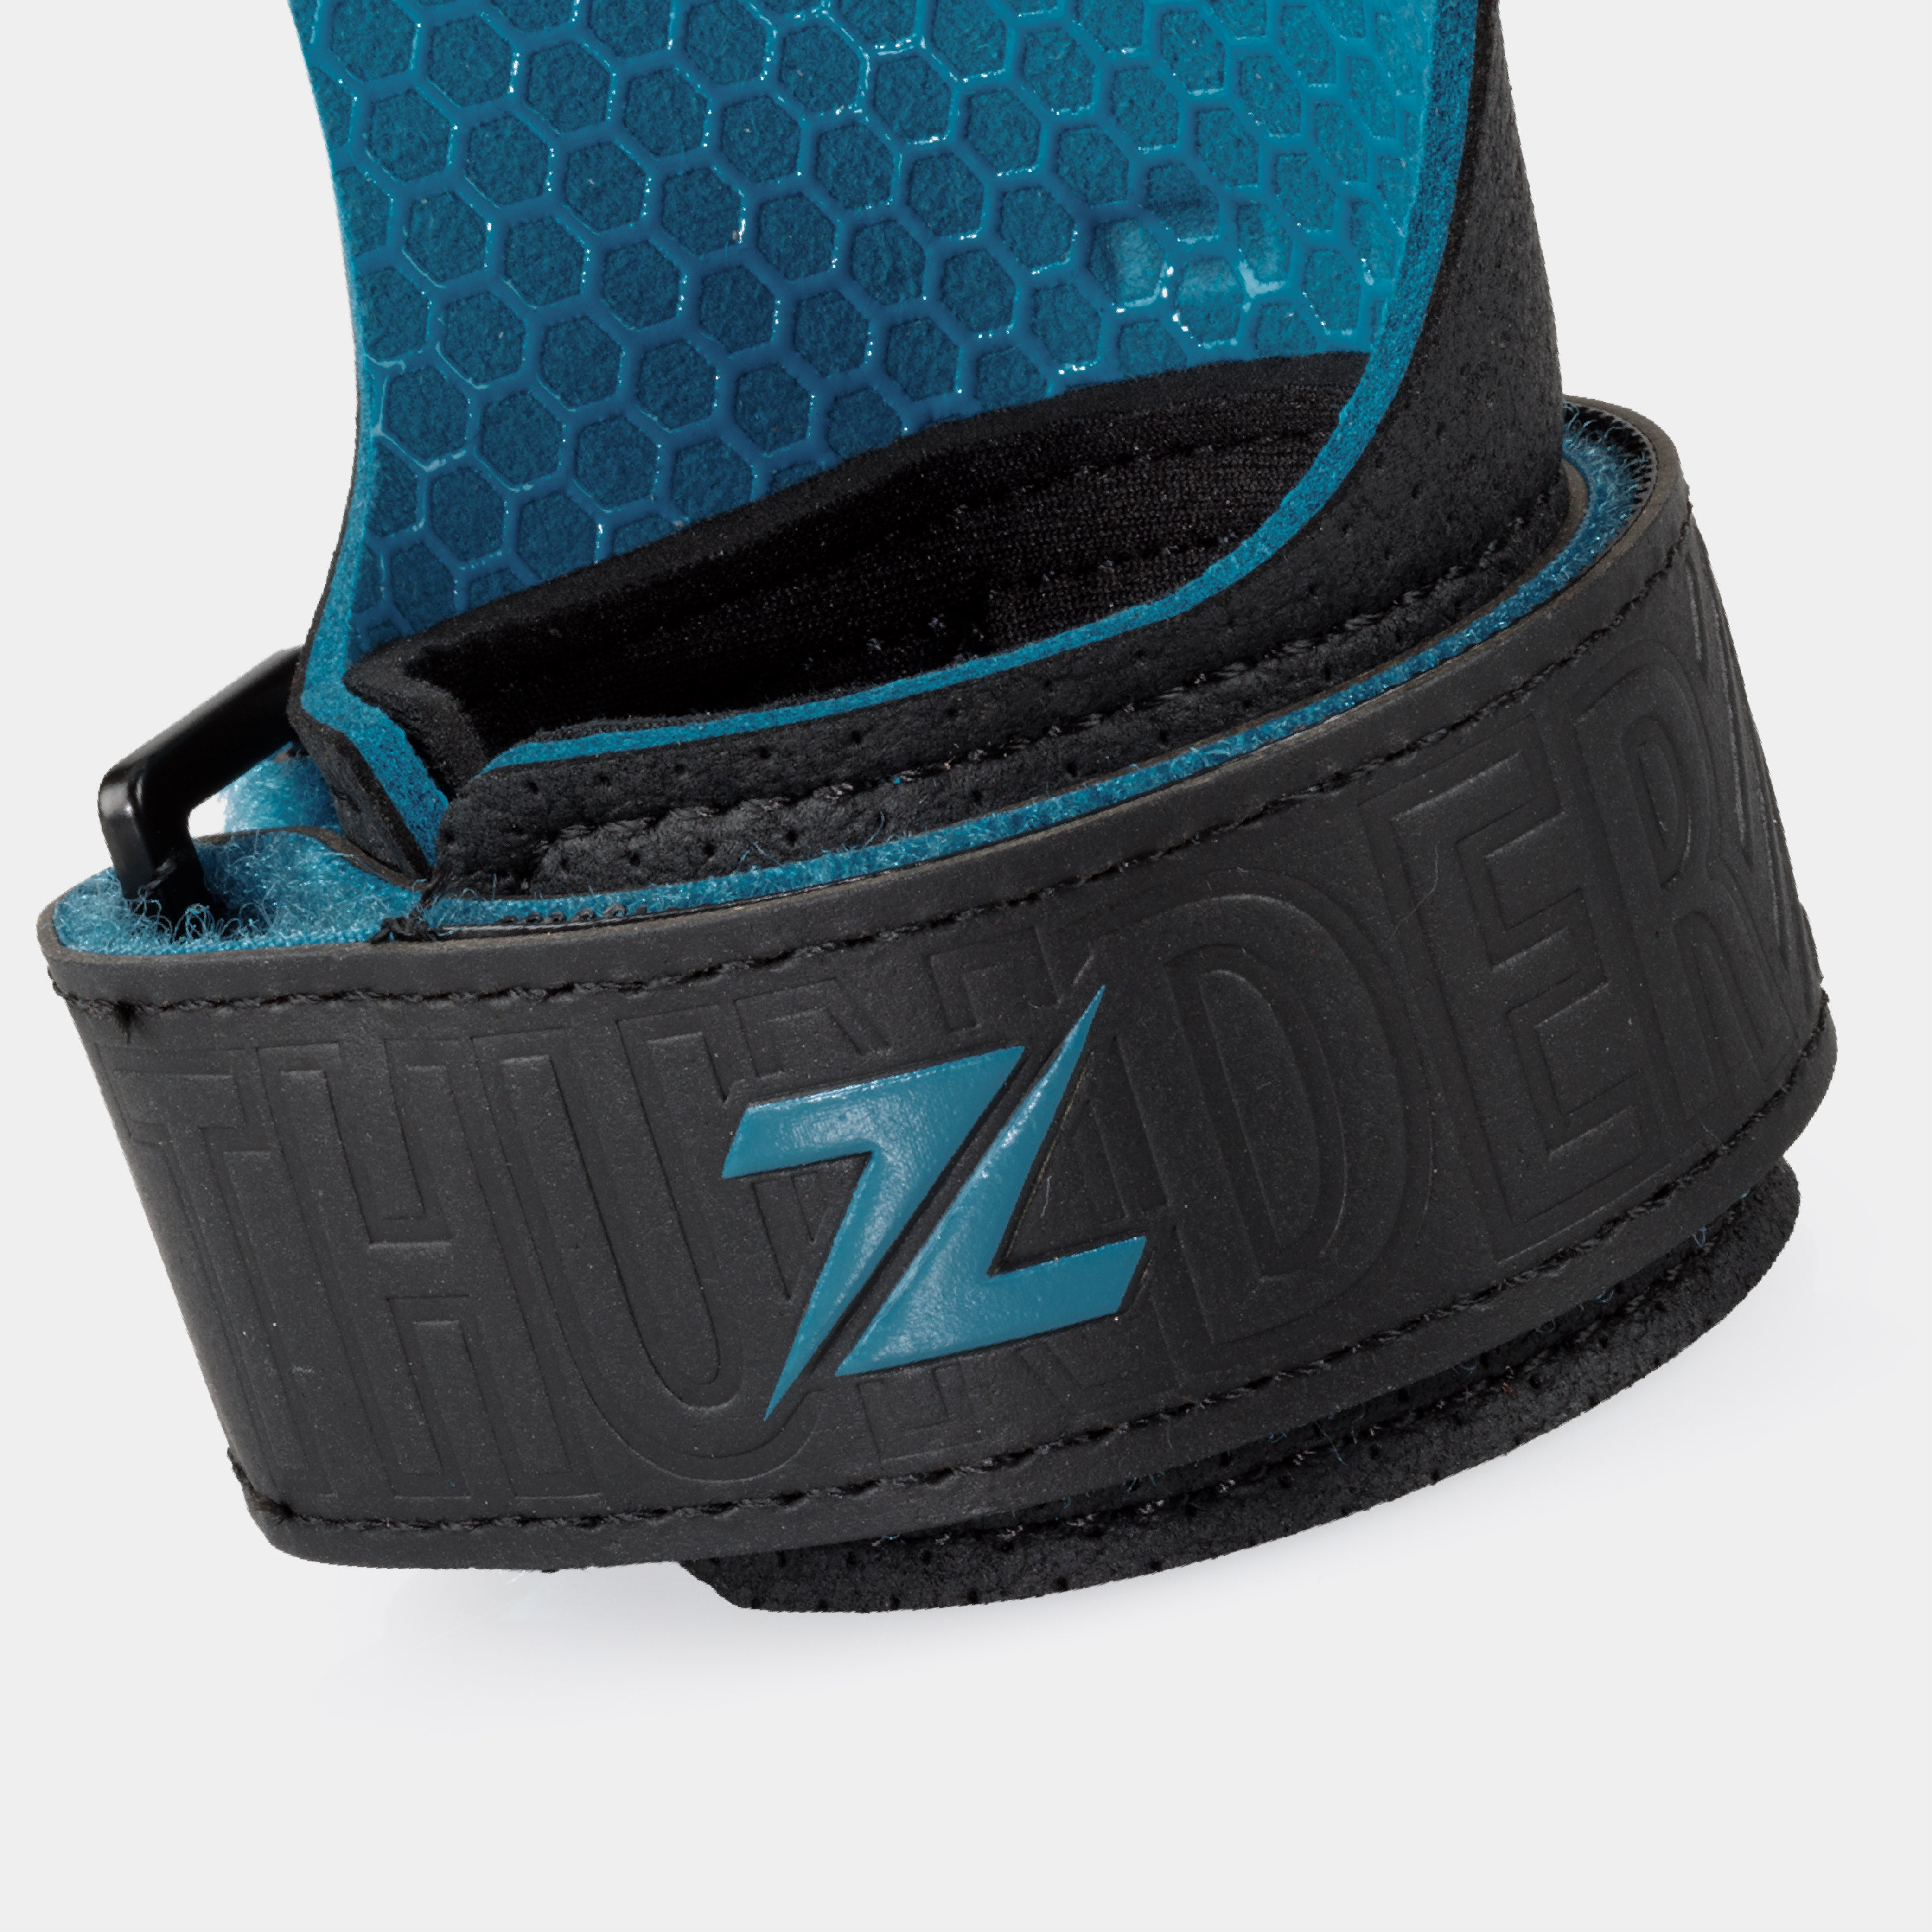 ZEUZ Thunder RX Fitness Microfiber Grips